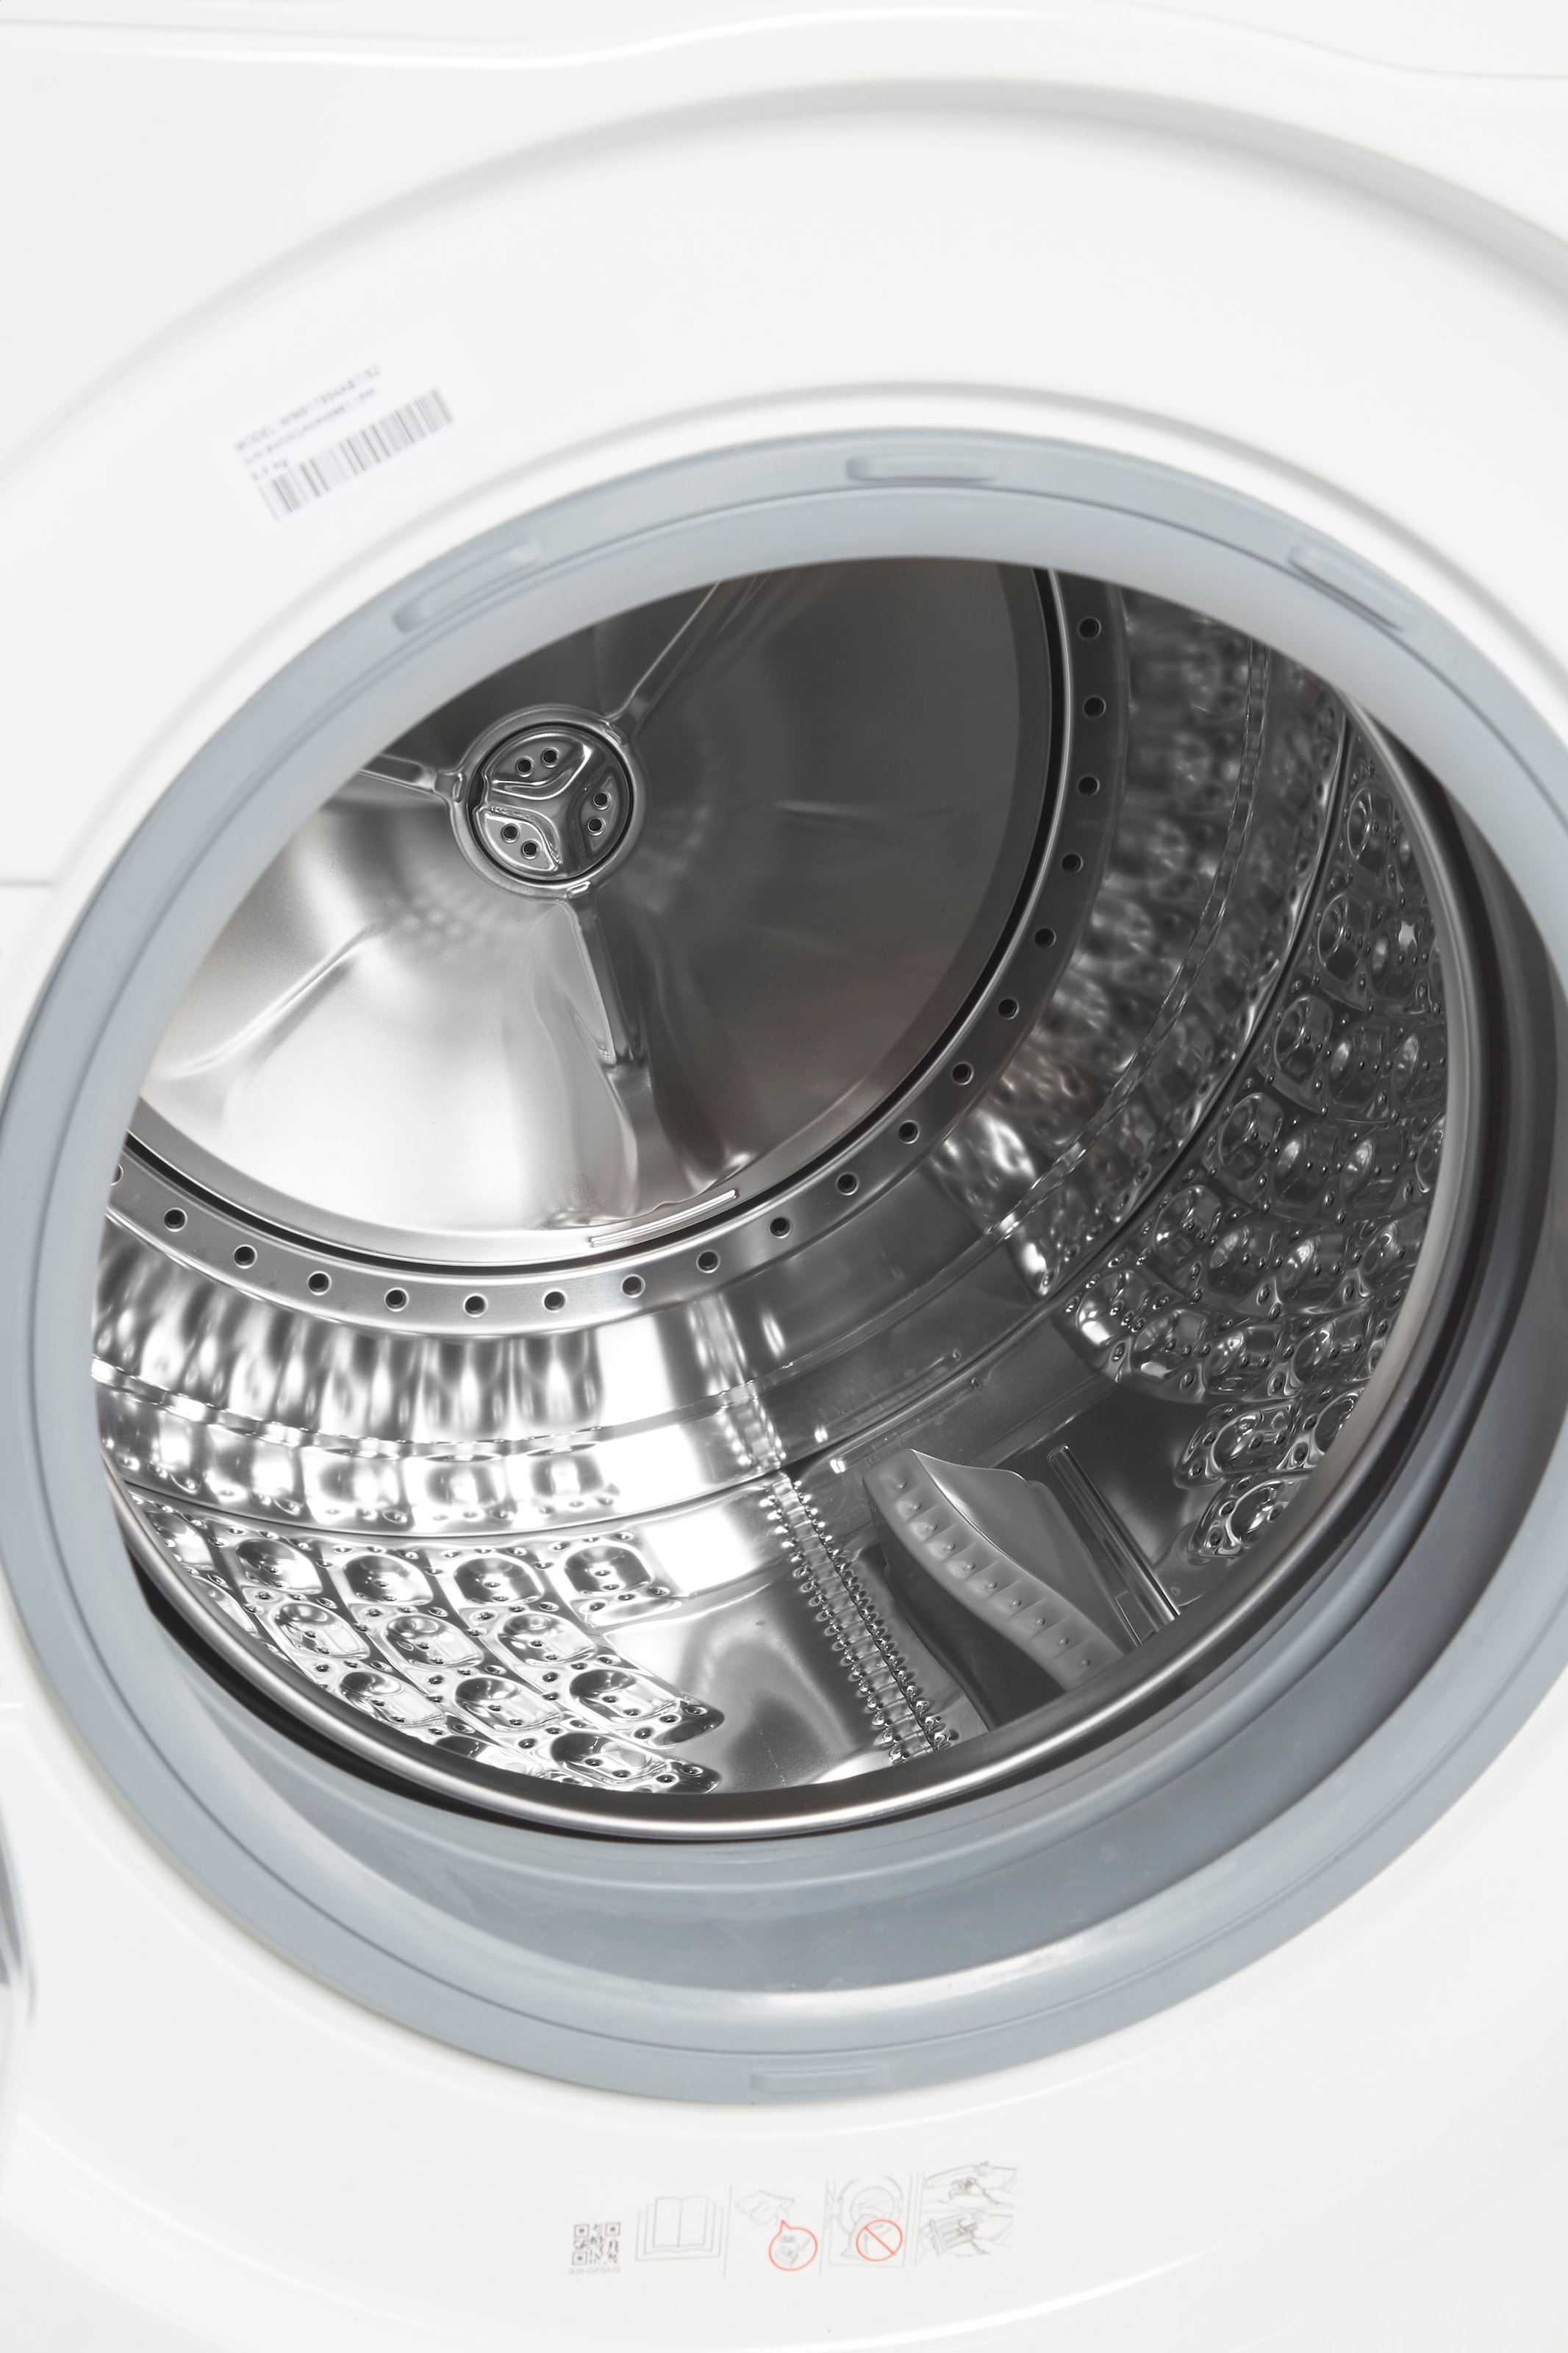 Samsung Waschmaschine »WW81T854ABT«, WW8500T, WW81T854ABT, 8 kg, 1400 U/min, QuickDrive™